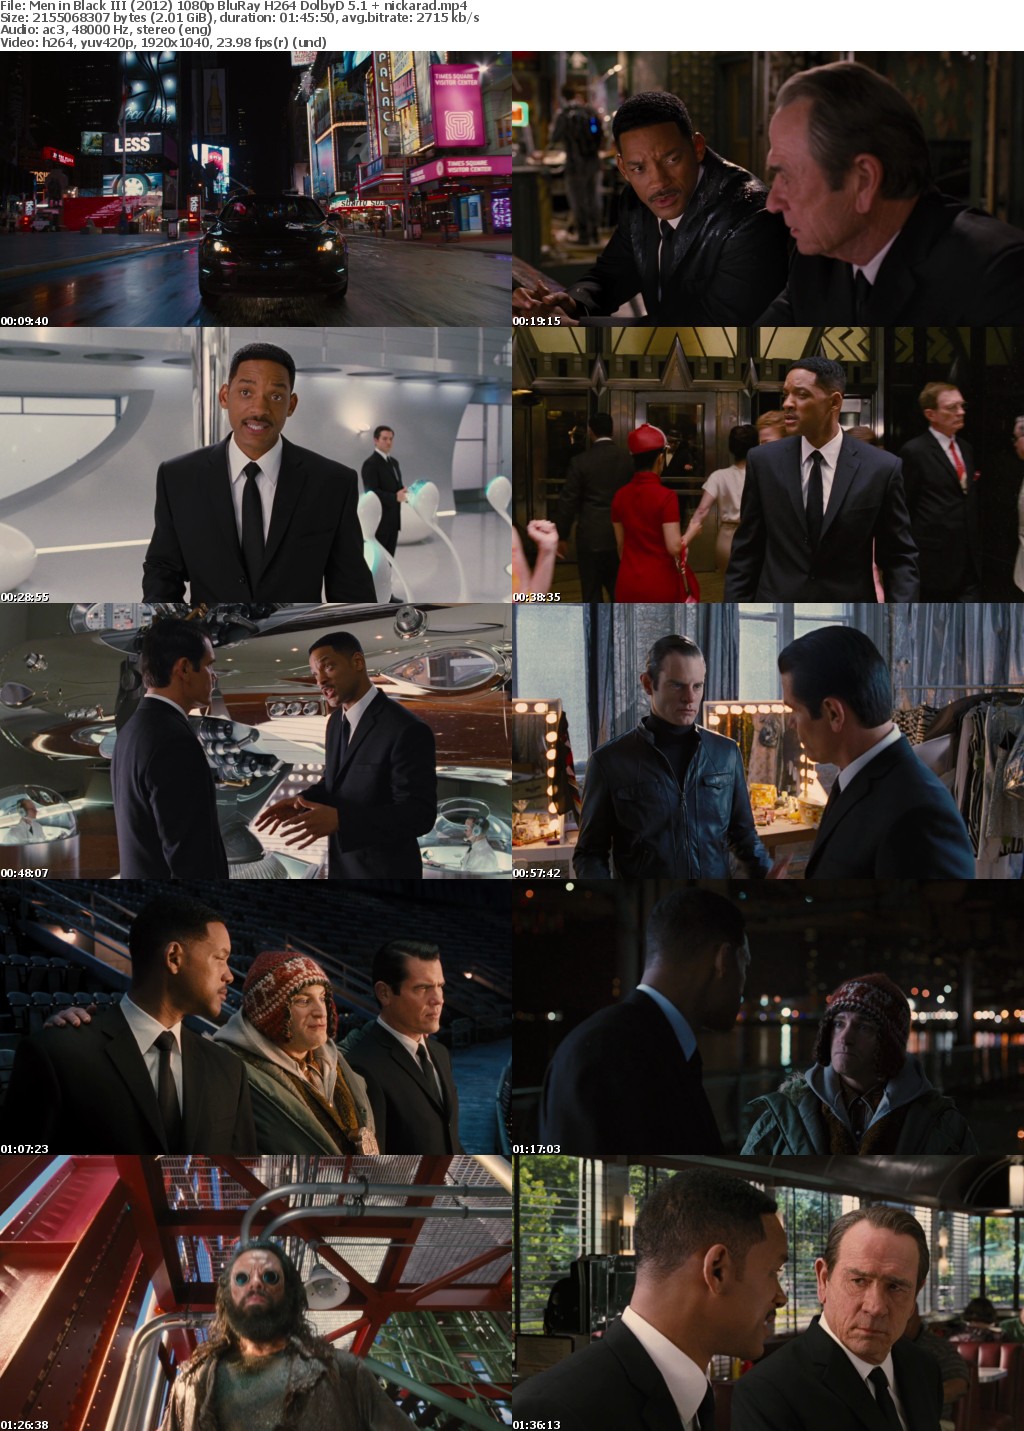 Men in Black III (2012) 1080p BluRay H264 DolbyD 5 1 nickarad